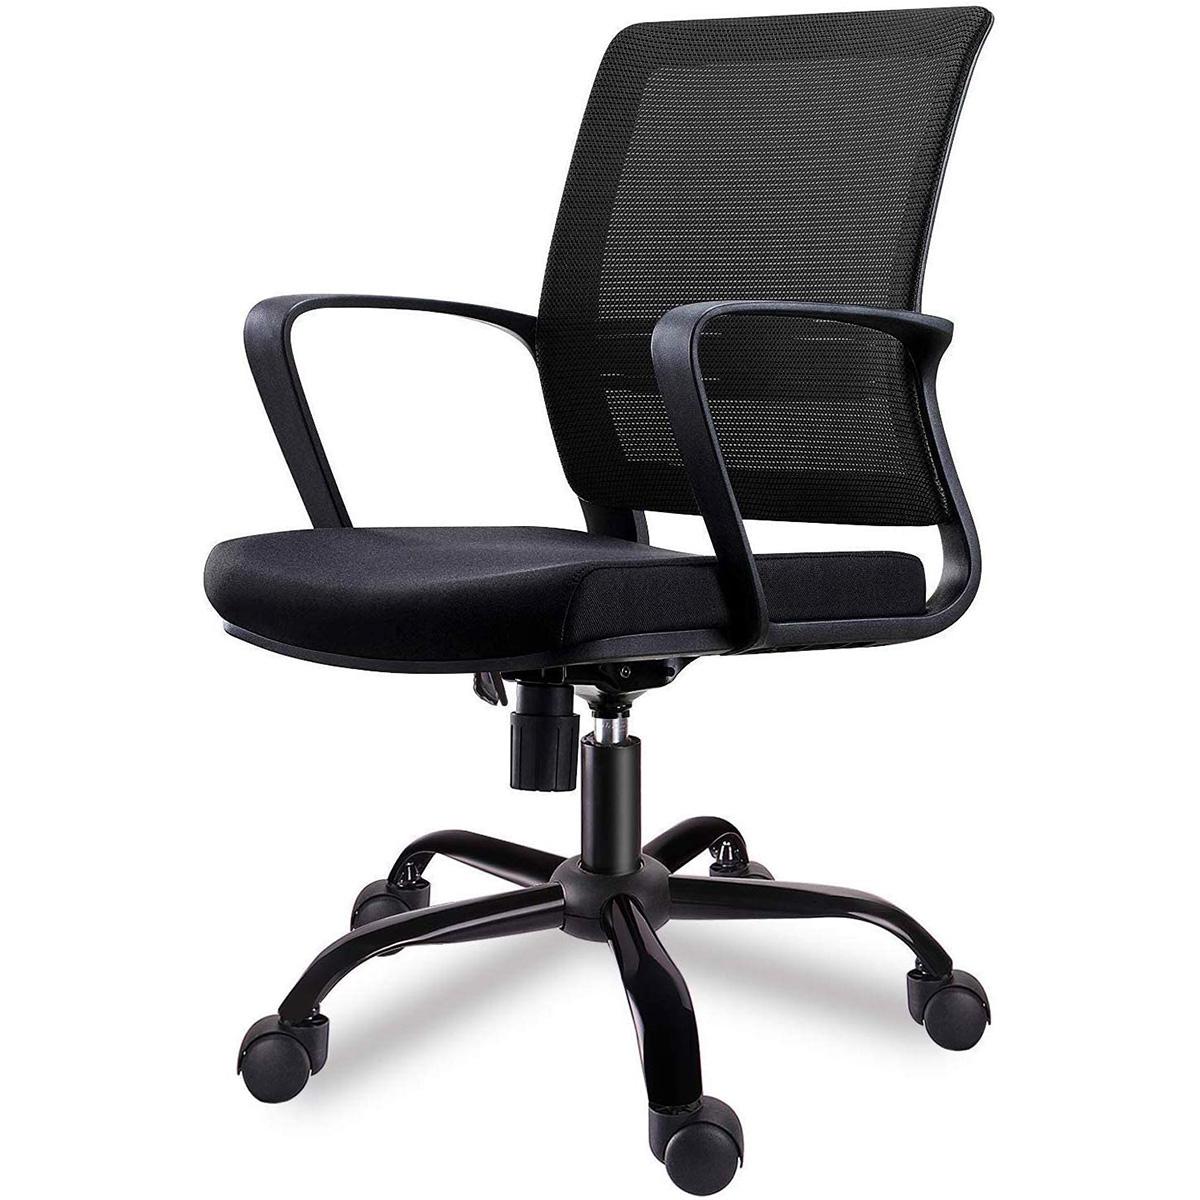 Smugdesk Mid-Back Big Ergonomic Computer Desk Chair for $43.99 Shipped